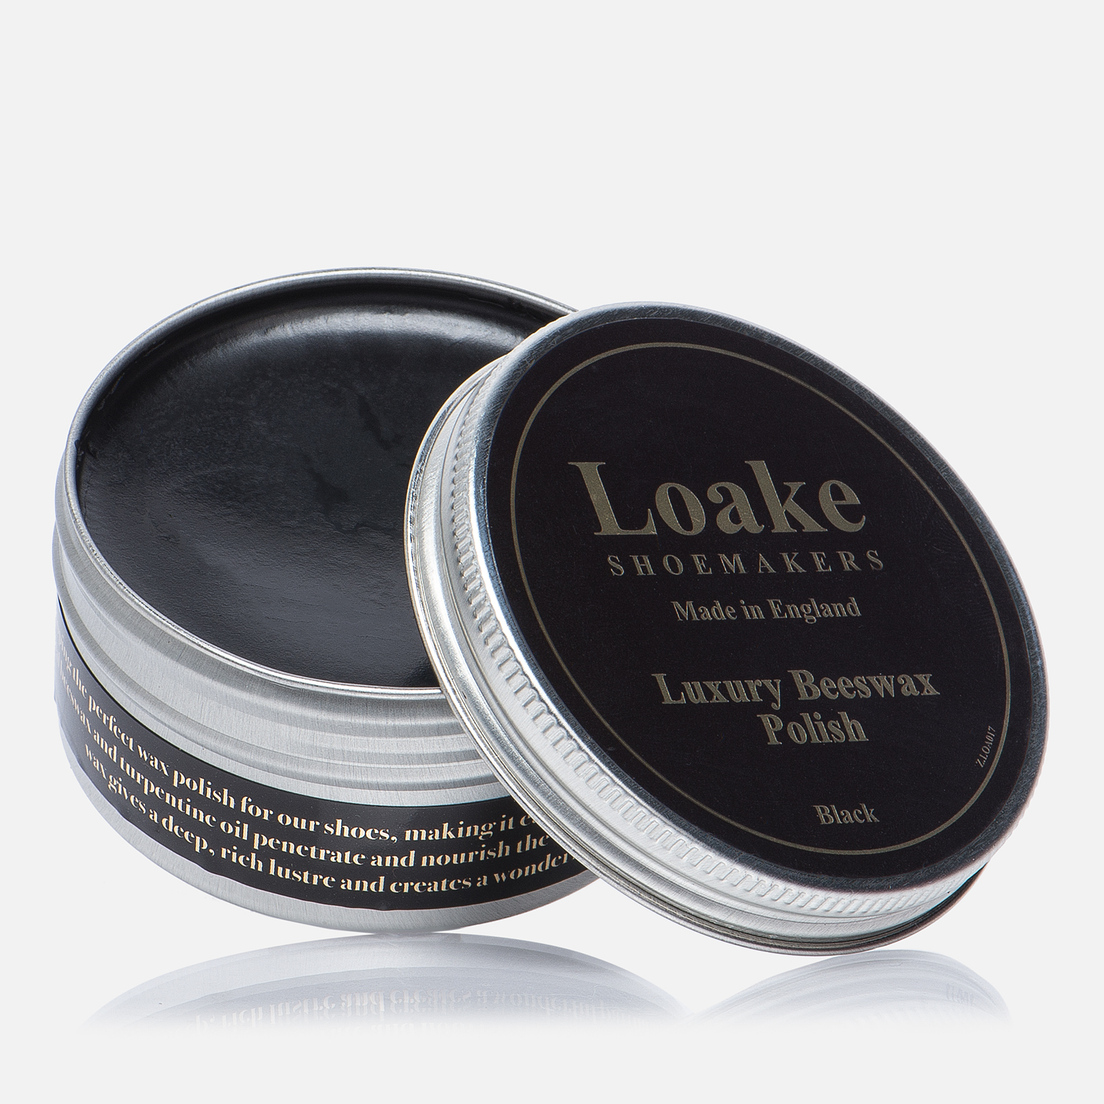 loake beeswax polish